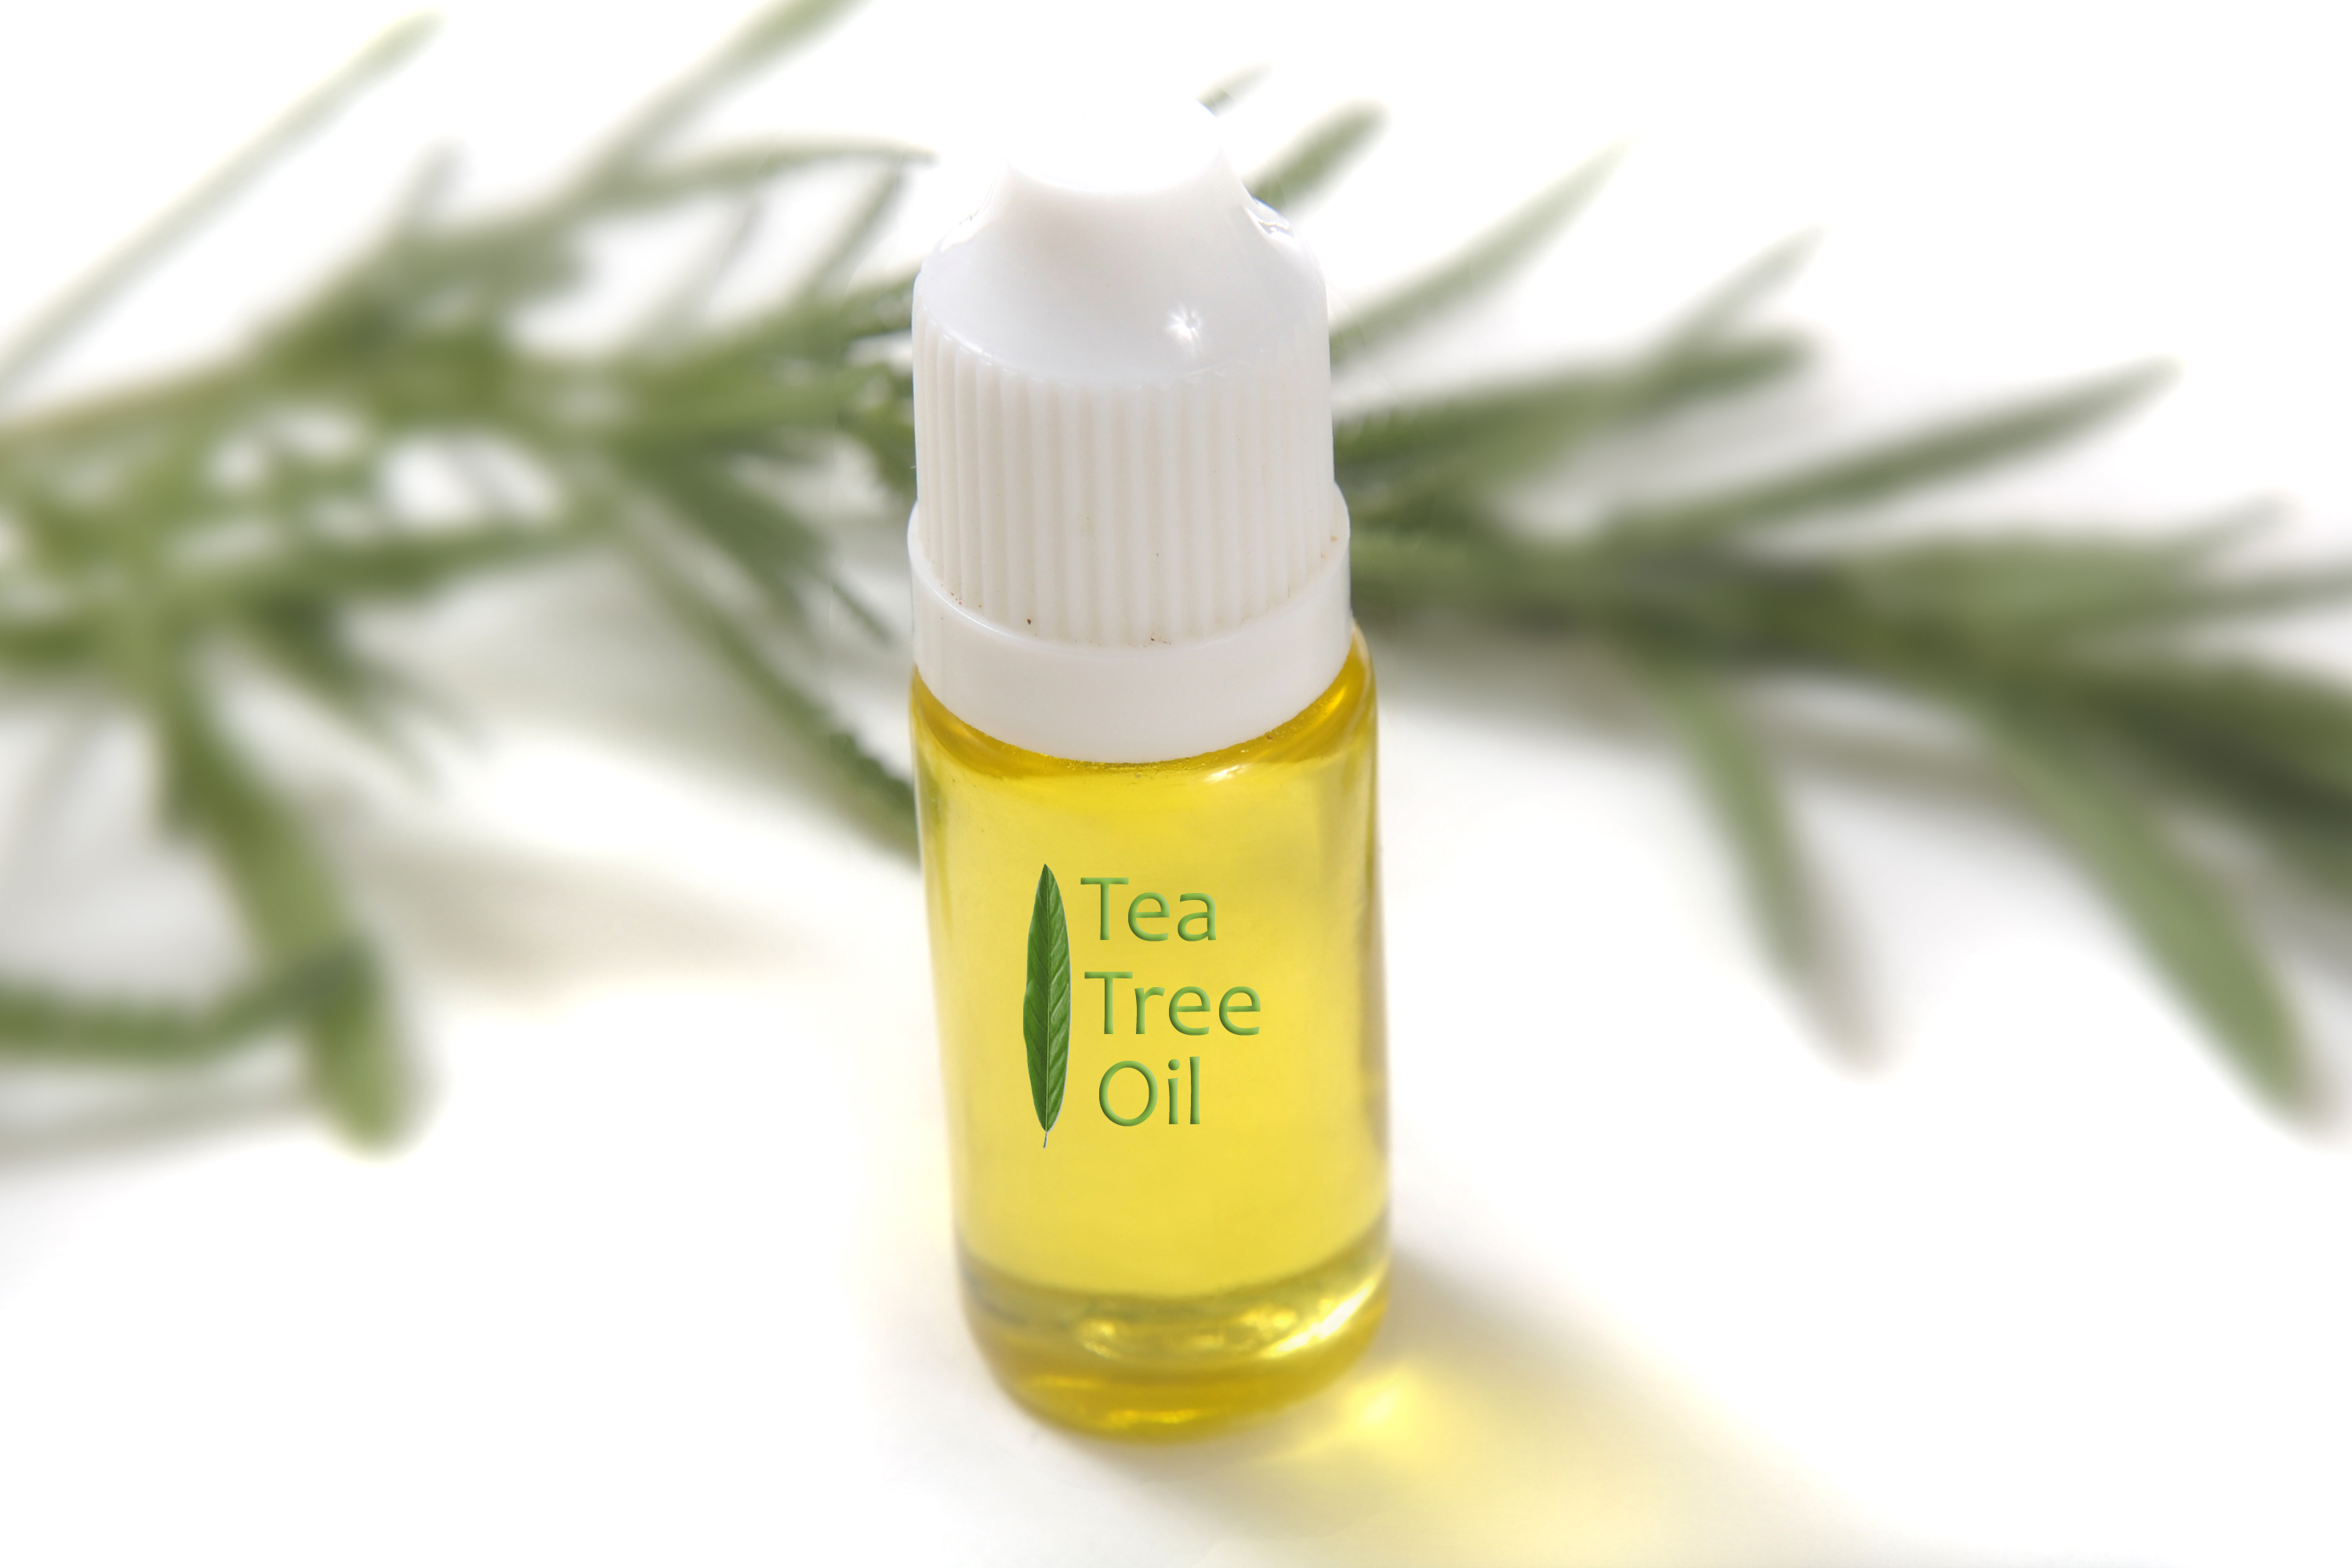 Tea tree oil - An natural dandruff shampoo